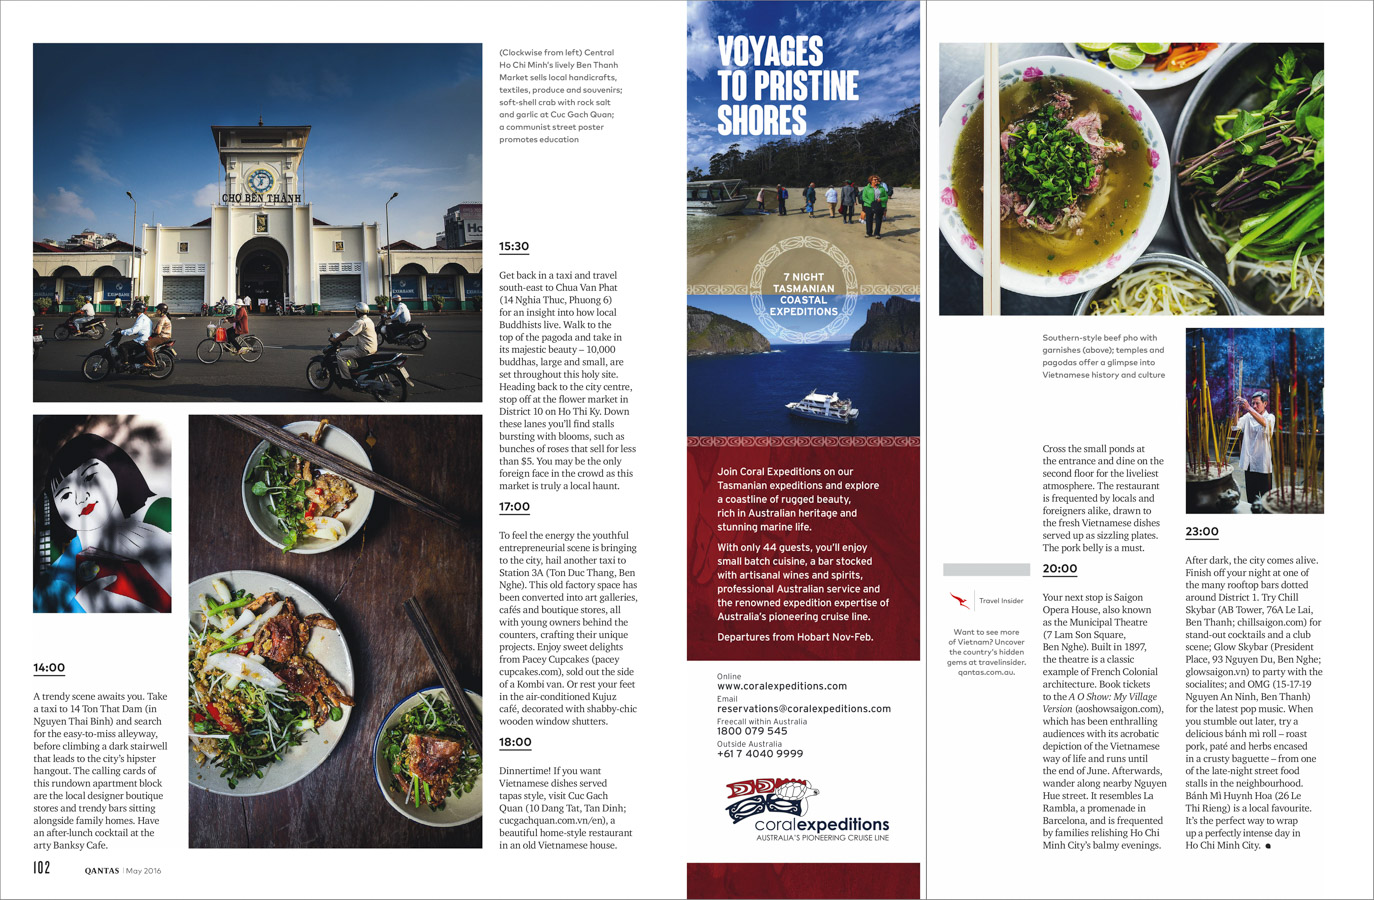 A feature travel story on Saigon for Qantas' inflight magazine.